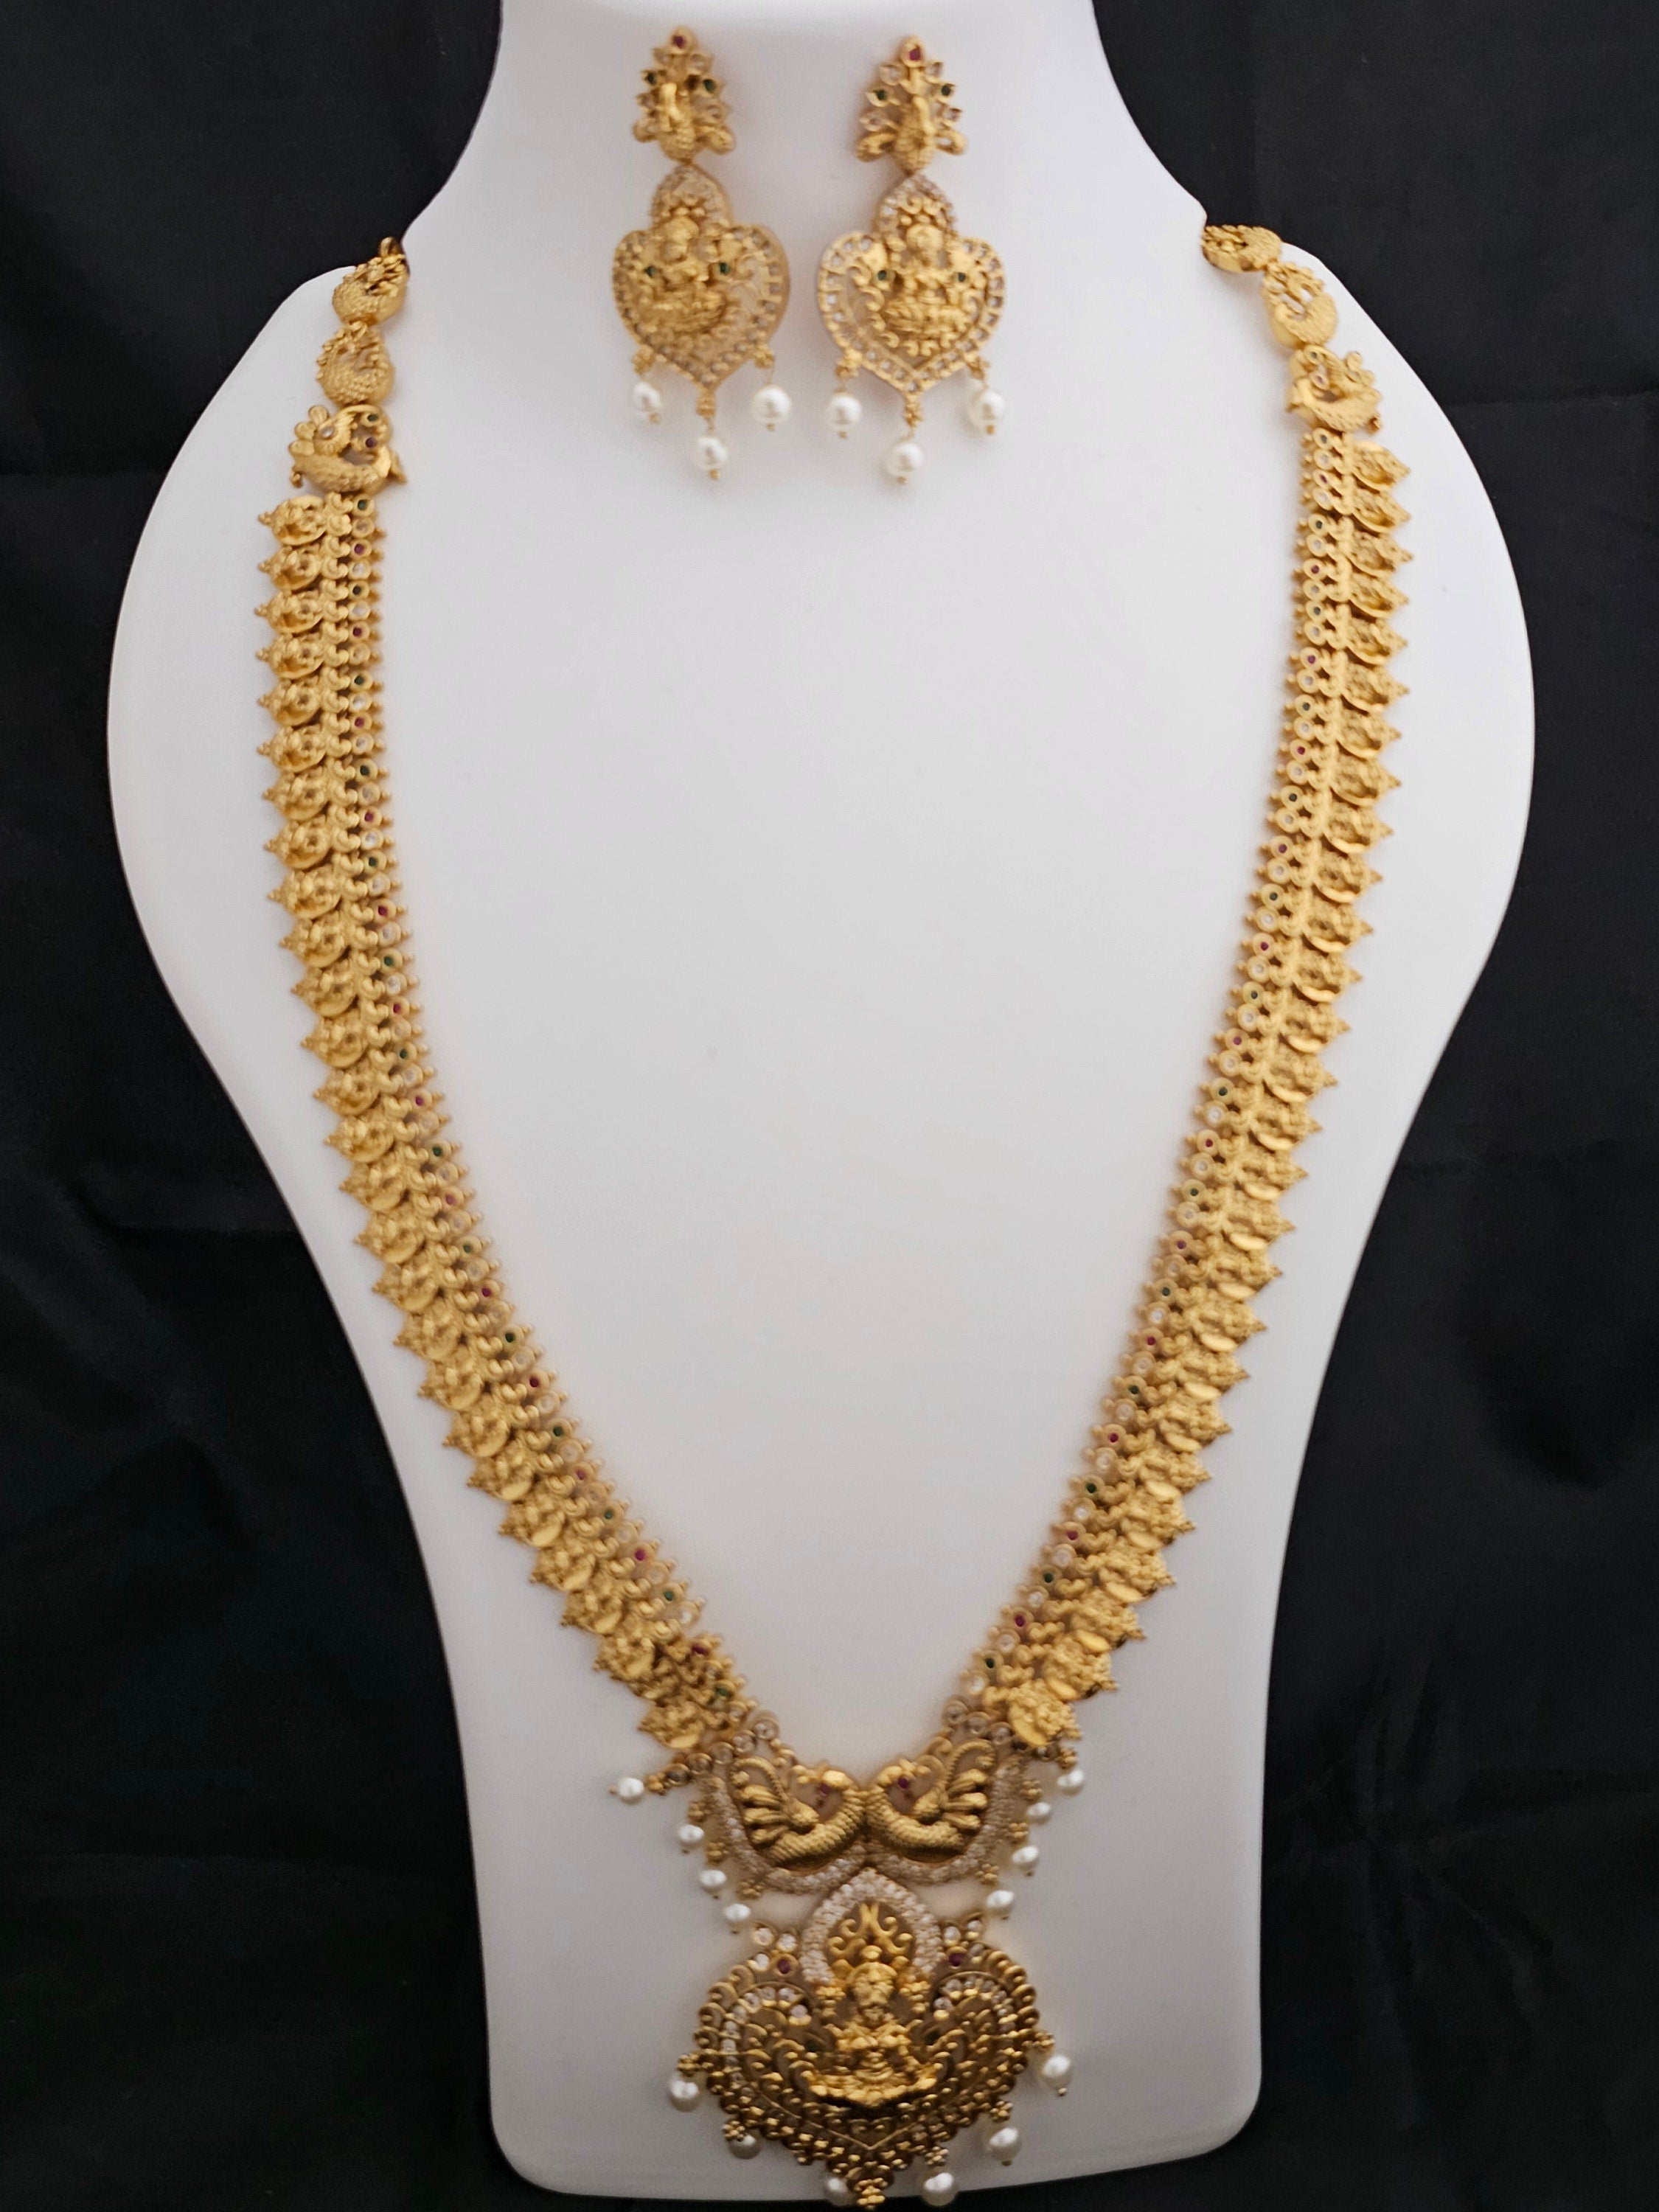 Premium Quality Lakshmi gold finish Haram with Lakshmi Earrings - Temple Jewelry - Ethnic Jewelry